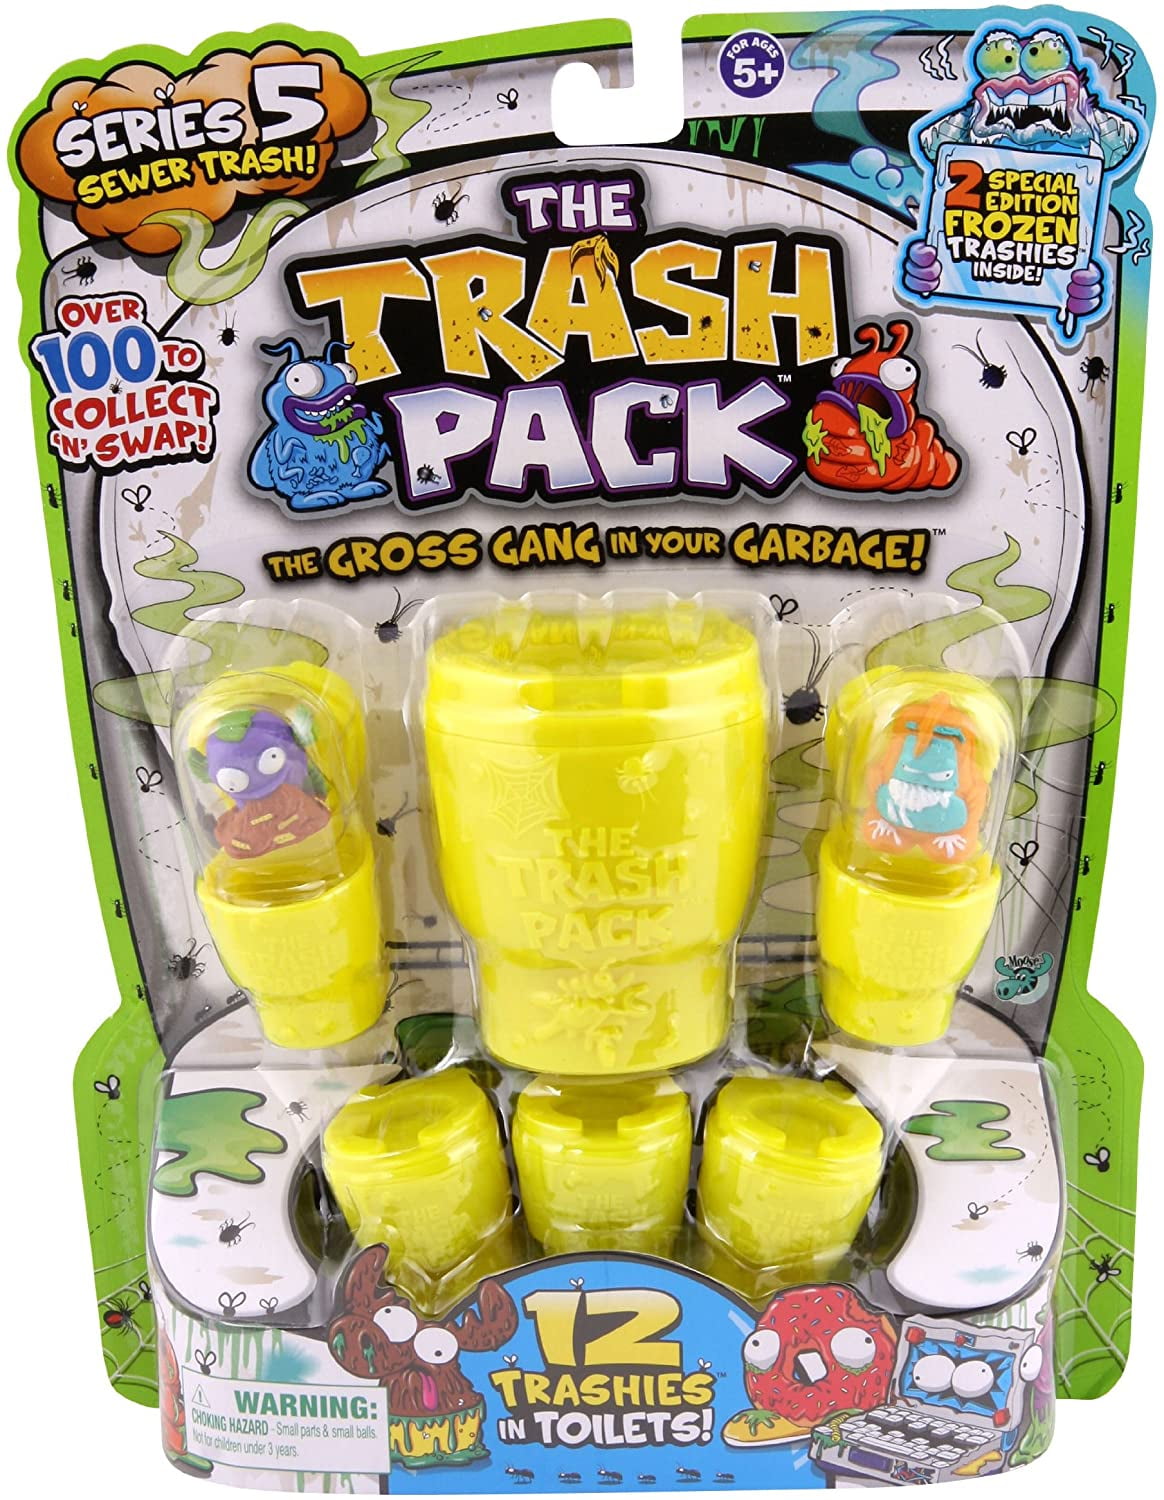 The Trash Pack Series 5 Sewer Trash 12 Trashies in Toilet Pack Random figures 